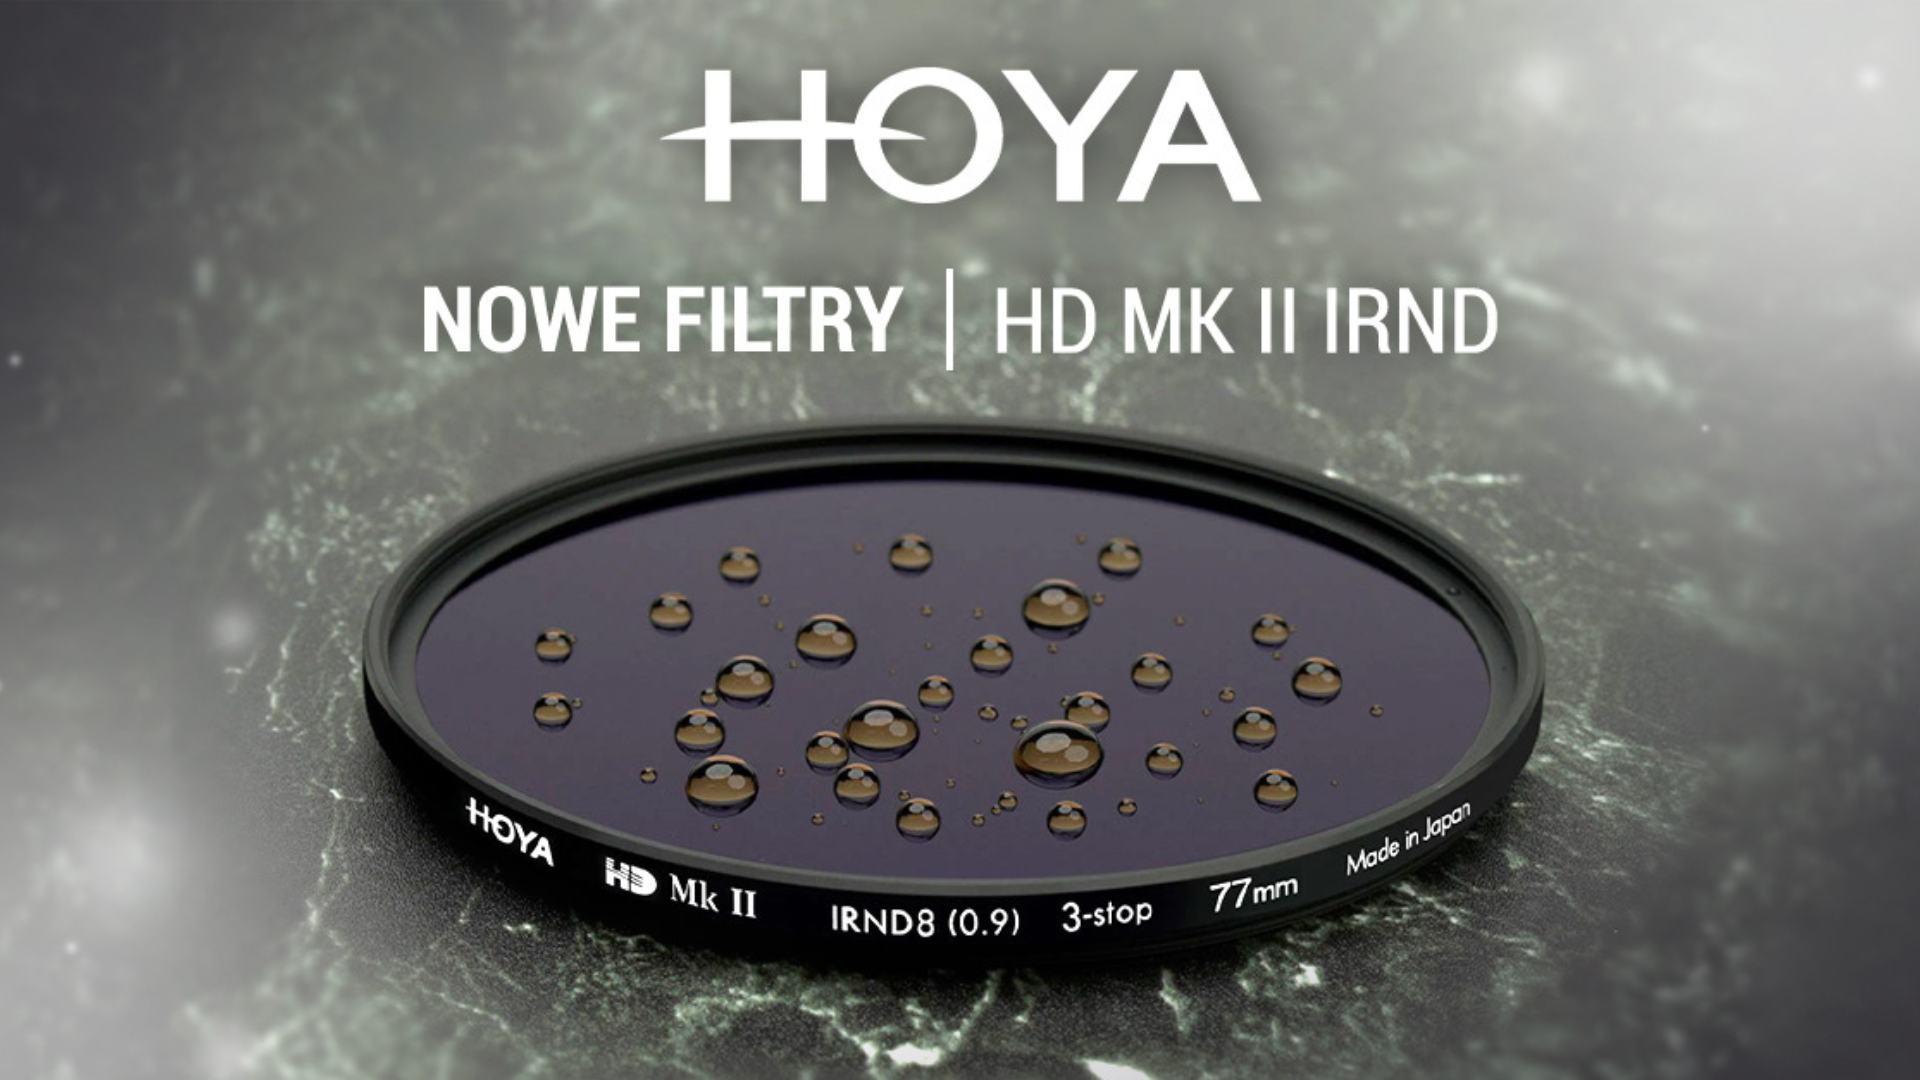 Nowe filtry Hoya HD MK II IRND już dostępne